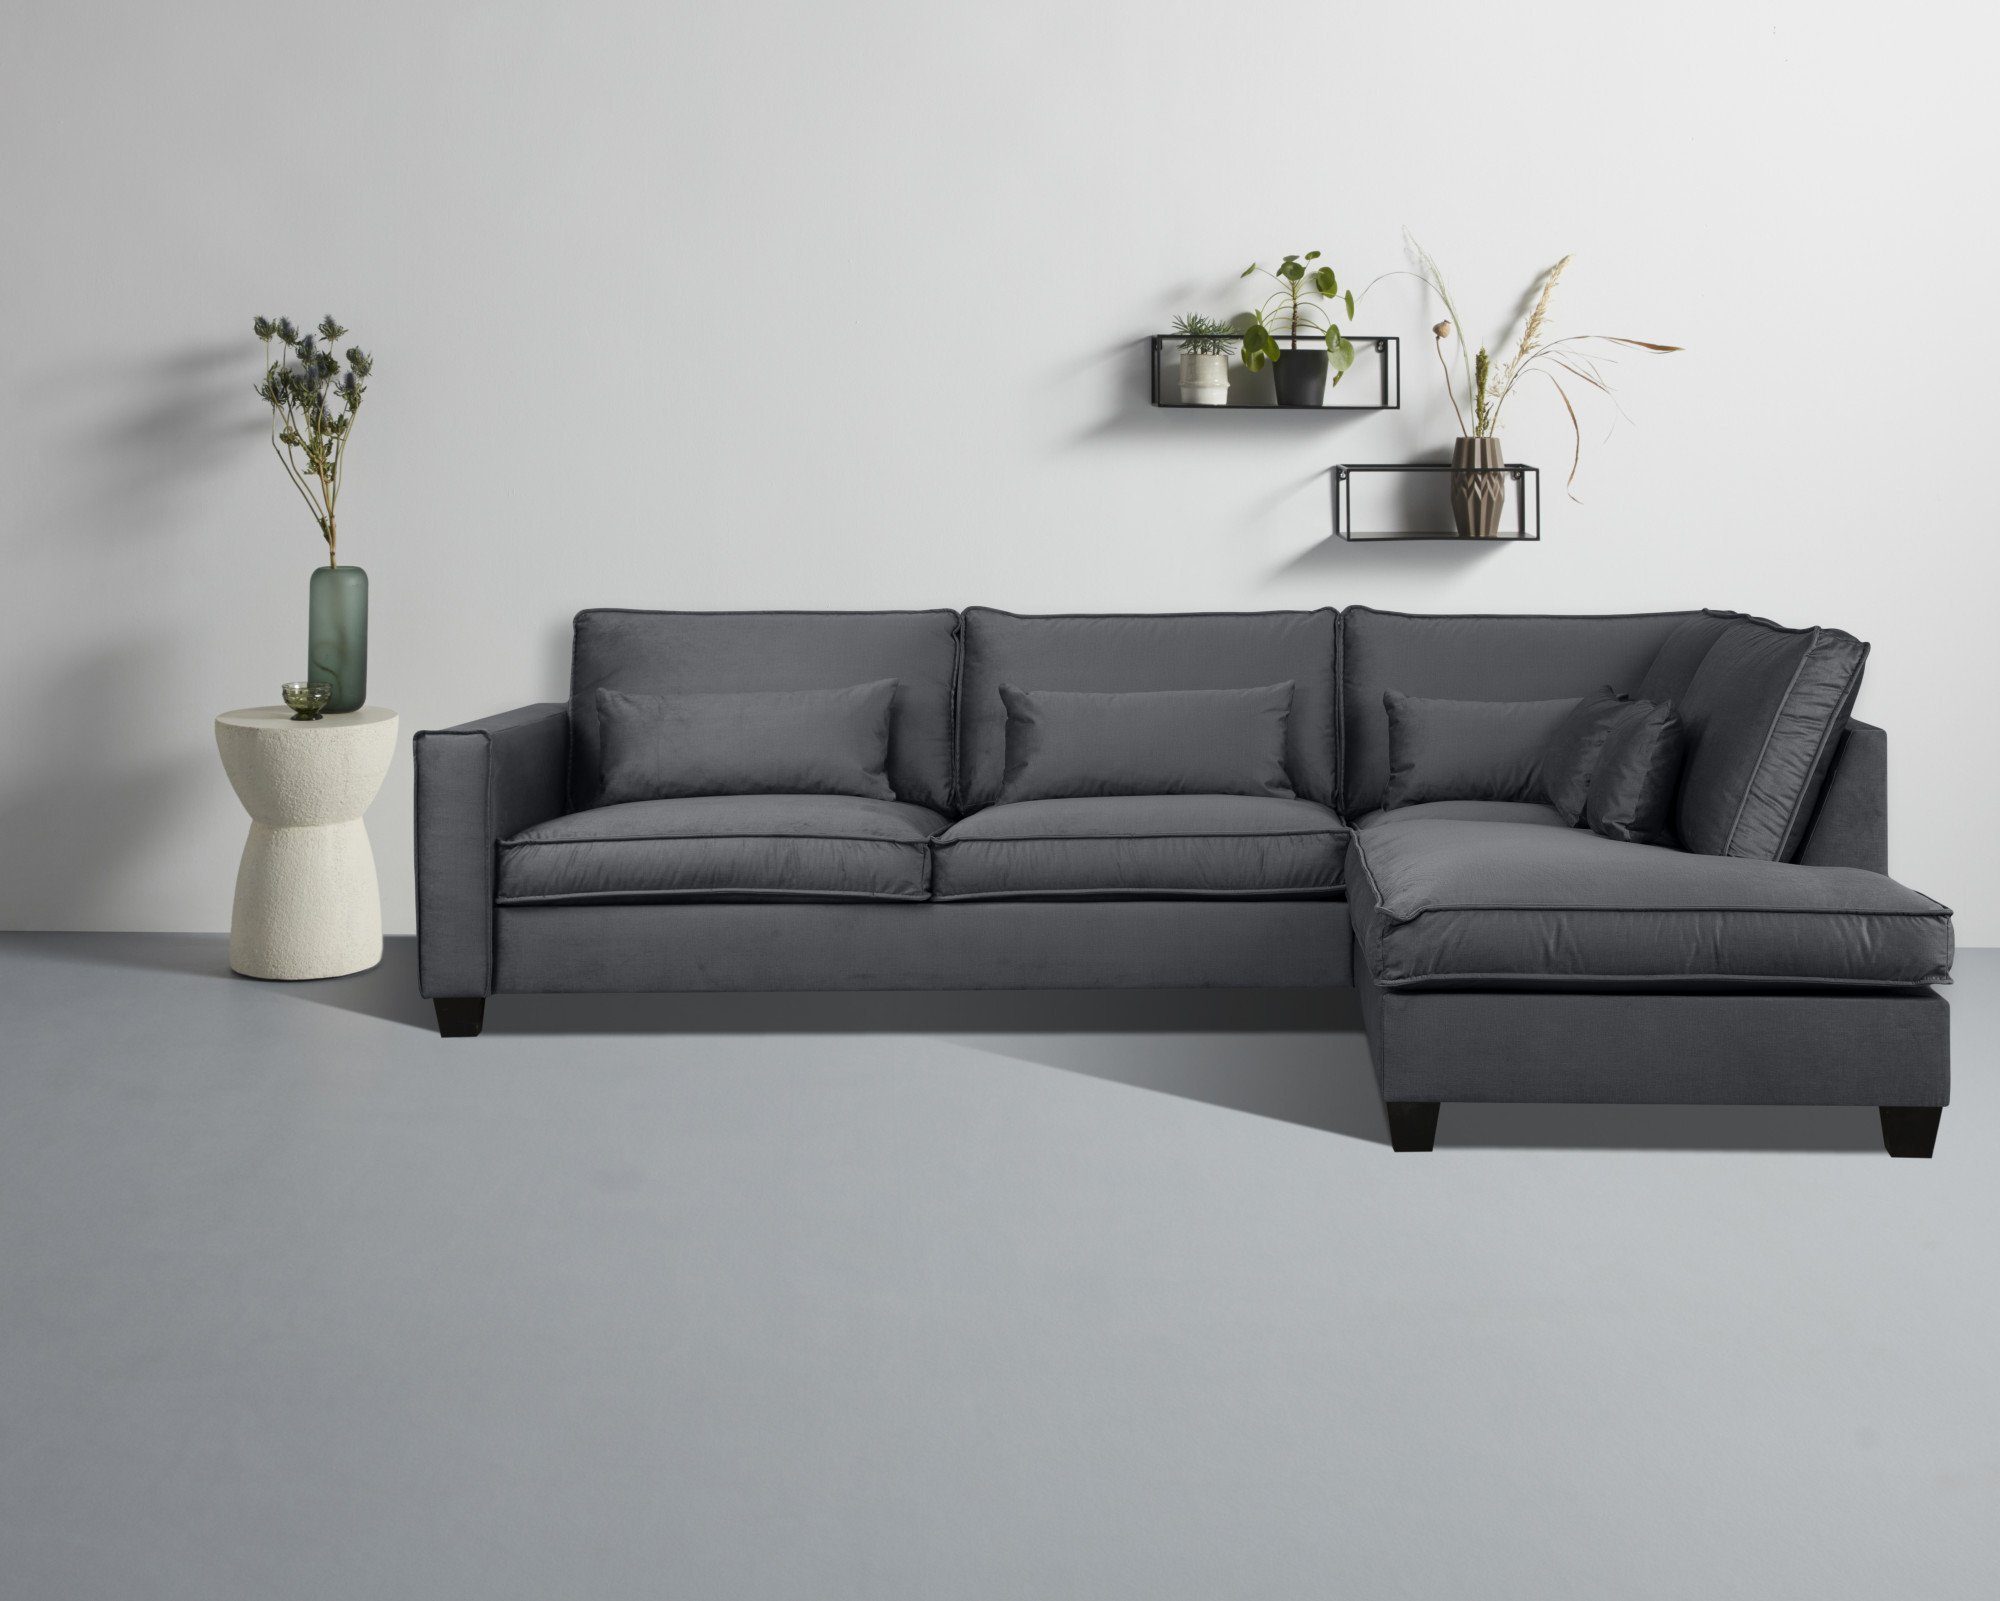 Home affaire Ecksofa Tilques, bequeme Sitzgelegenheiten, viele Farben verfügbar middle gray